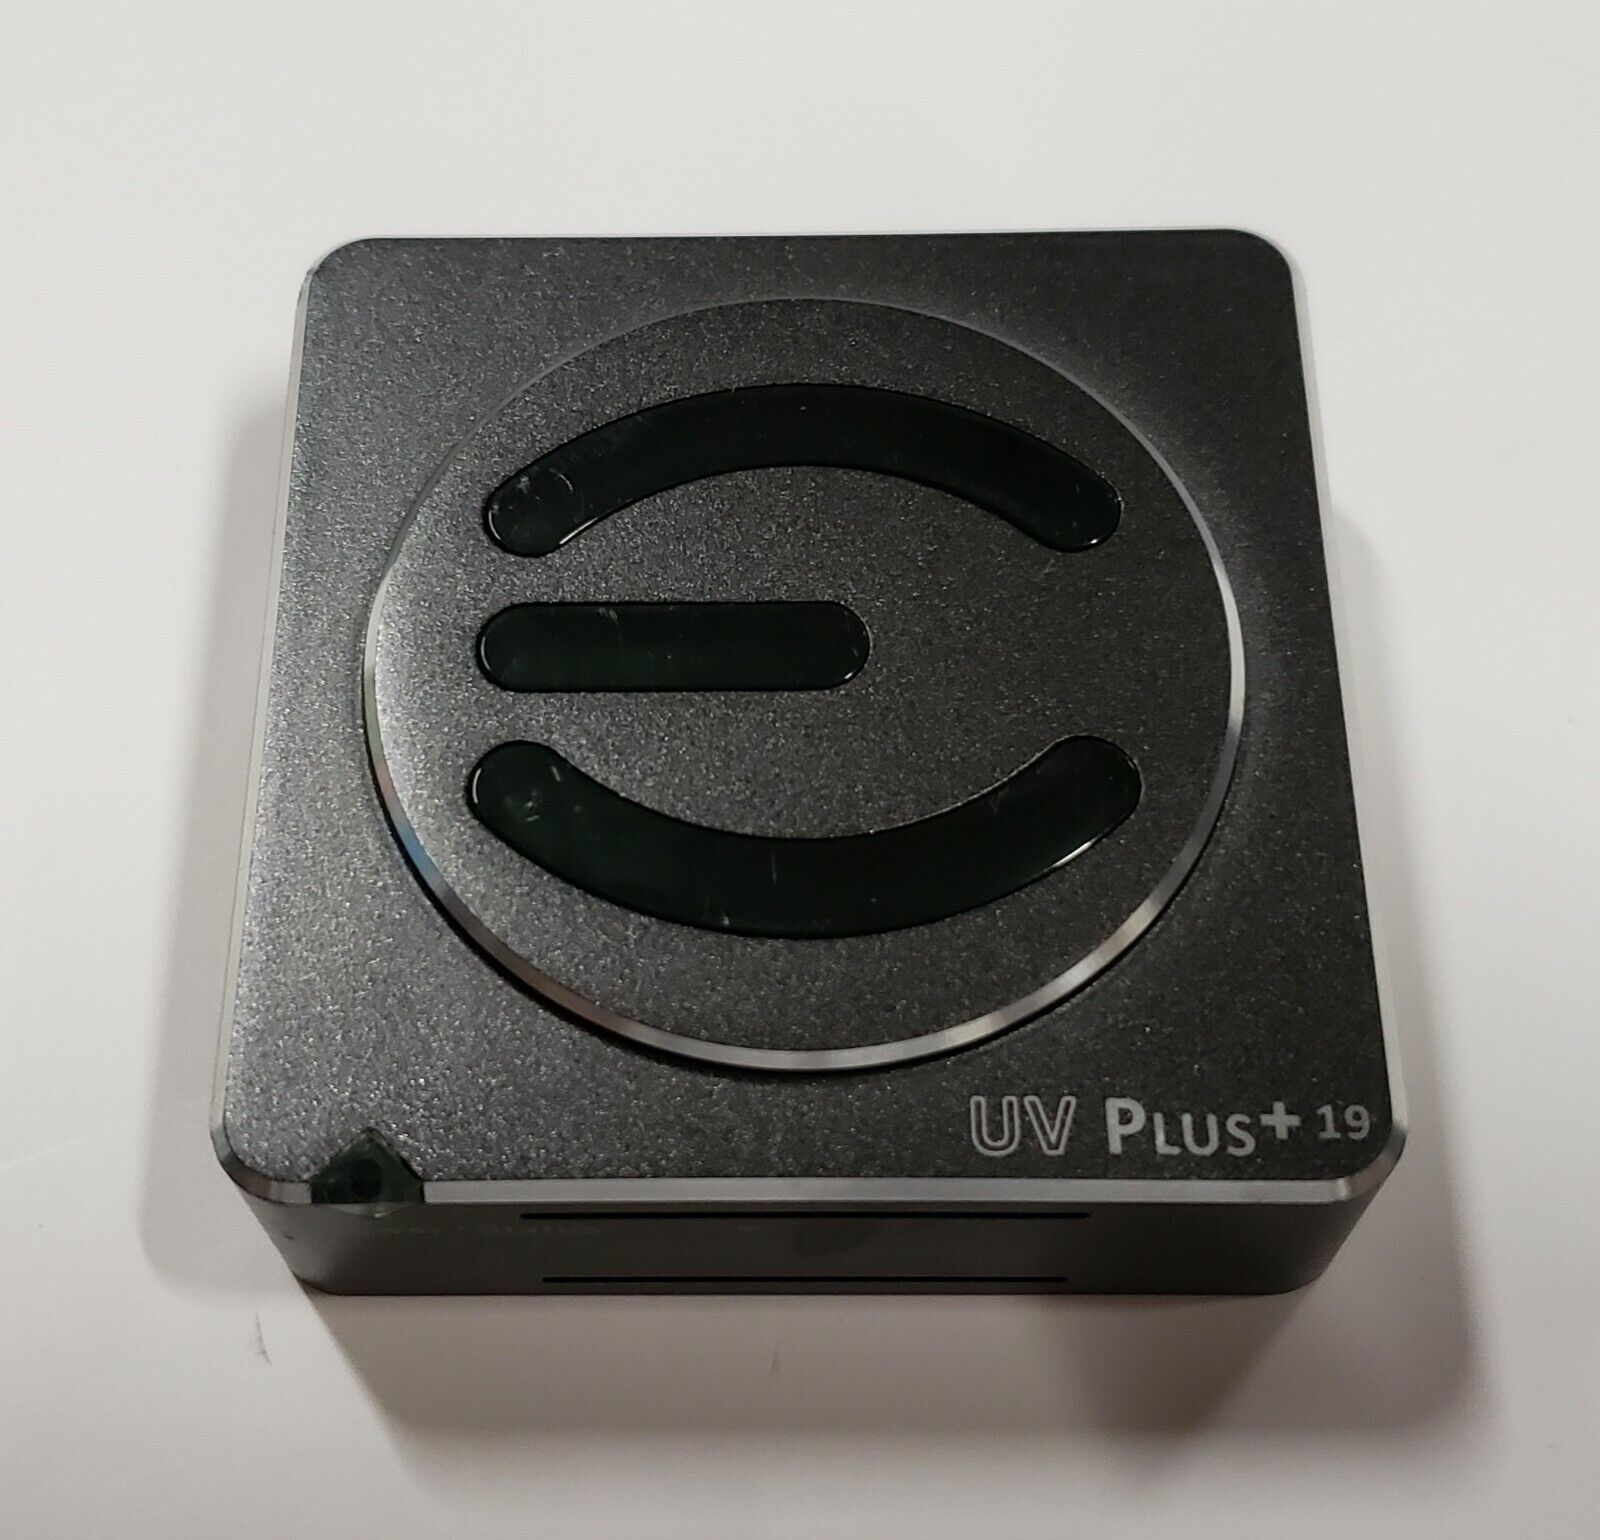 EVGA 100-U2-UV19-TR DisplayLink UV Plus+ 19 External Graphics Card Video Adapter